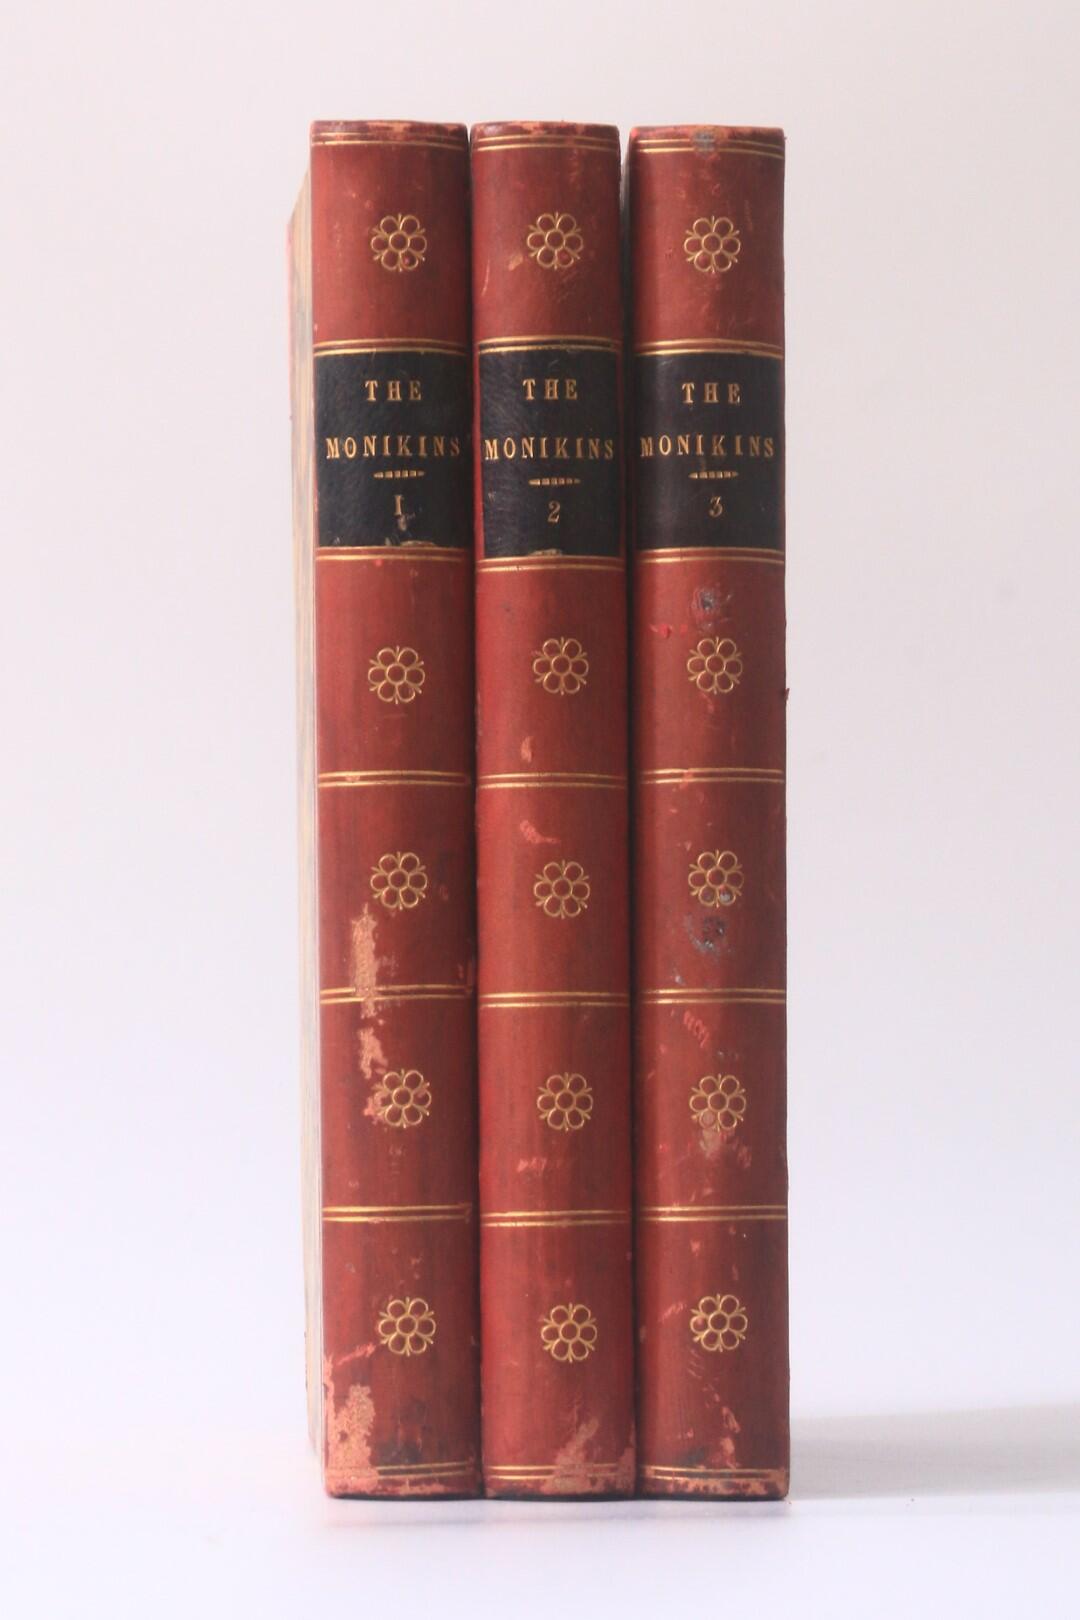 James Fenimore Cooper - The Monikins - Richard Bentley, 1835, First Edition.